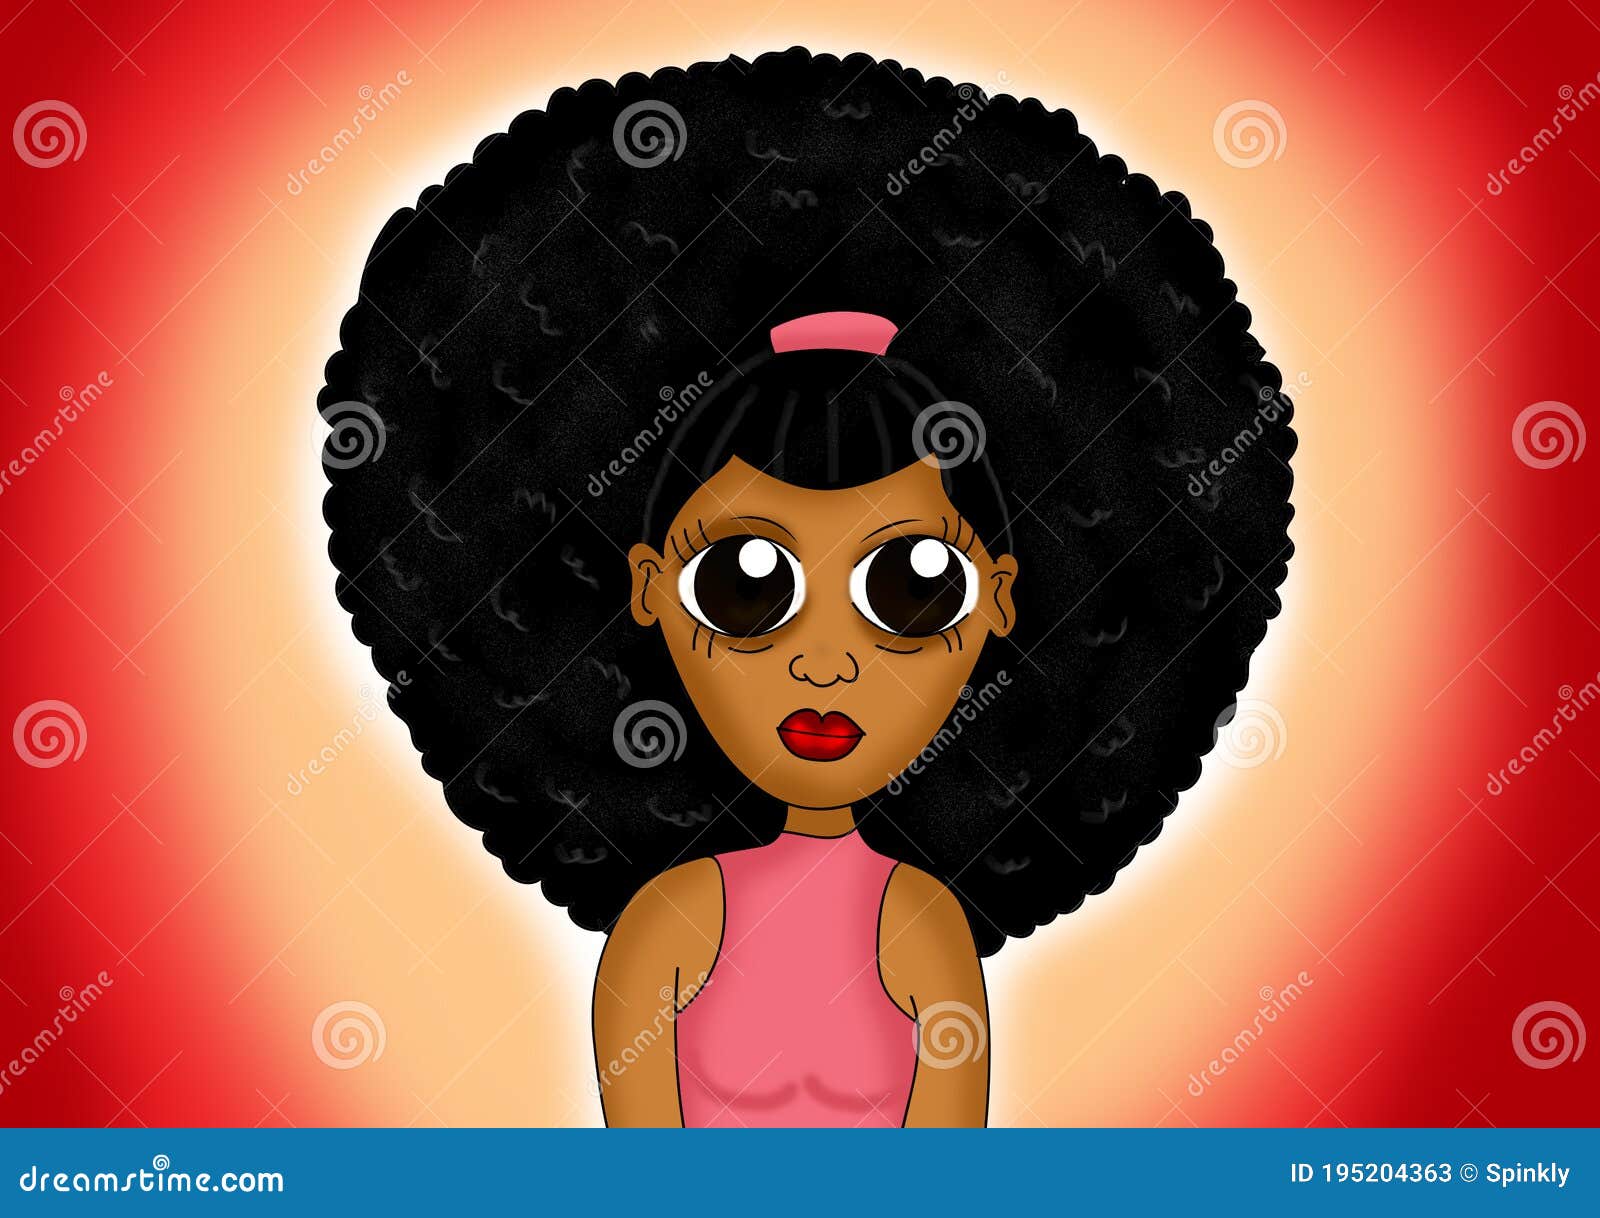 Afro cartoon with girl Black Girl